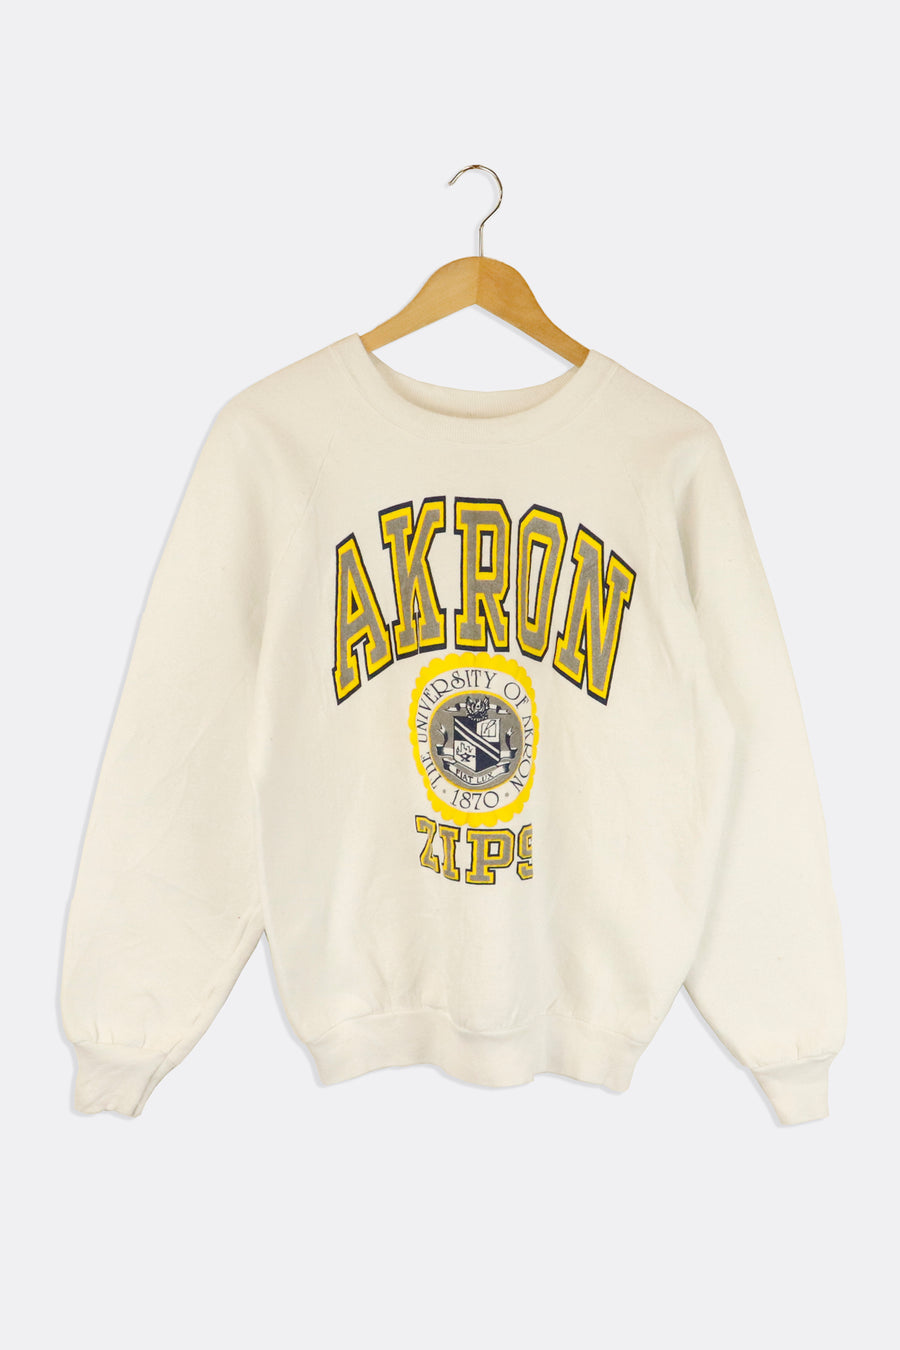 Vintage Akron Zips Puffy Vinyl Logo And Font Sweatshirt Sz L